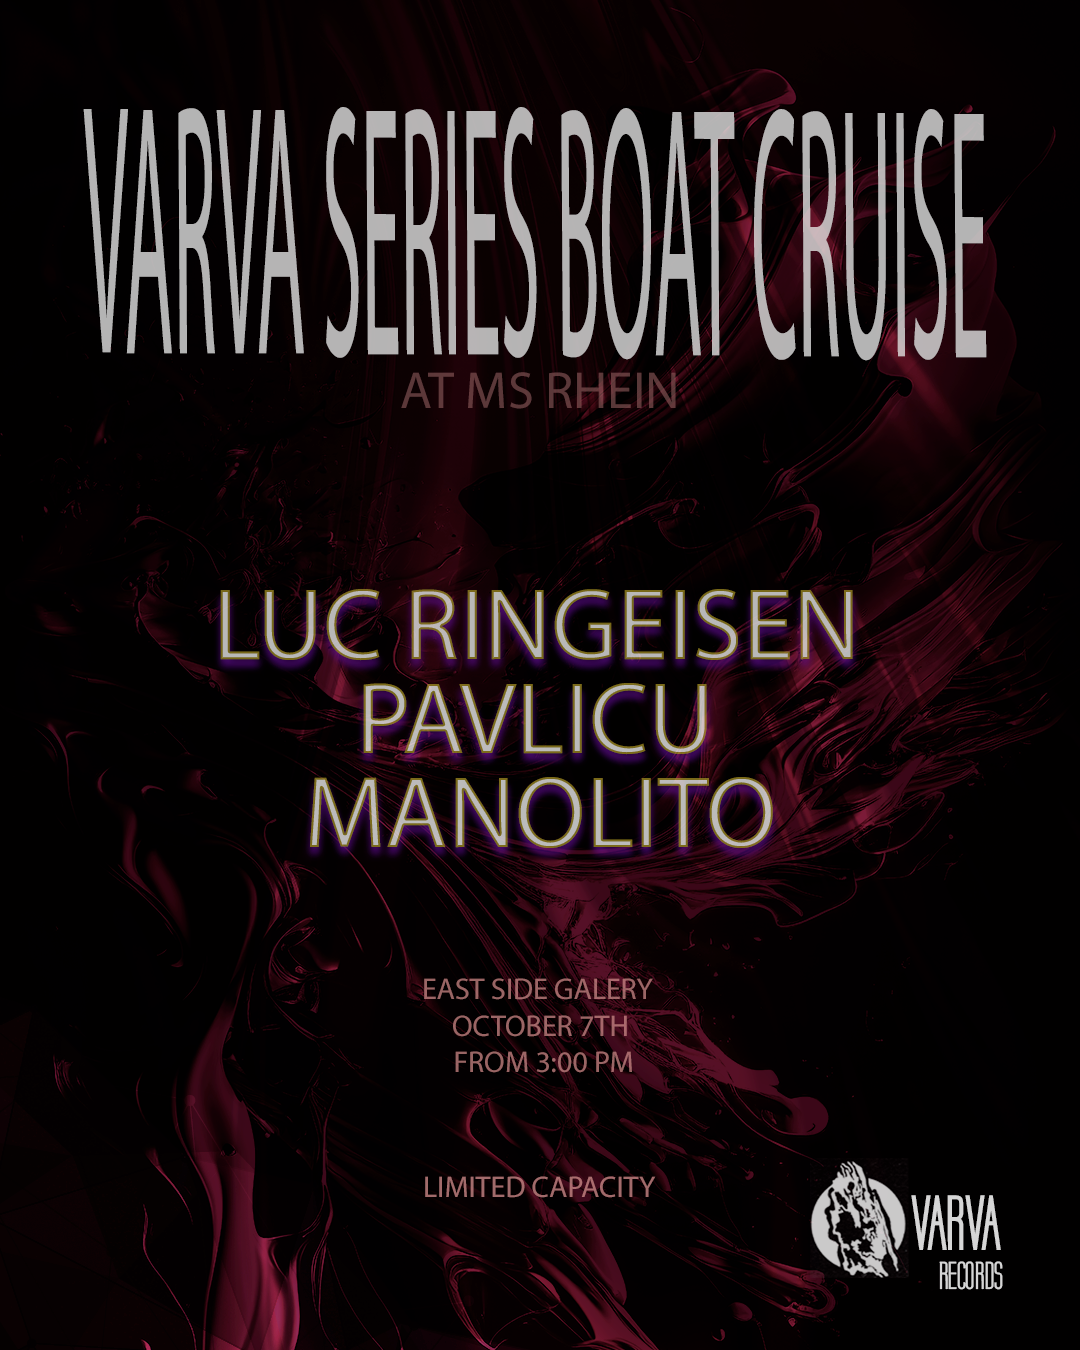 VARVA SERIES Boat Cruise - フライヤー表